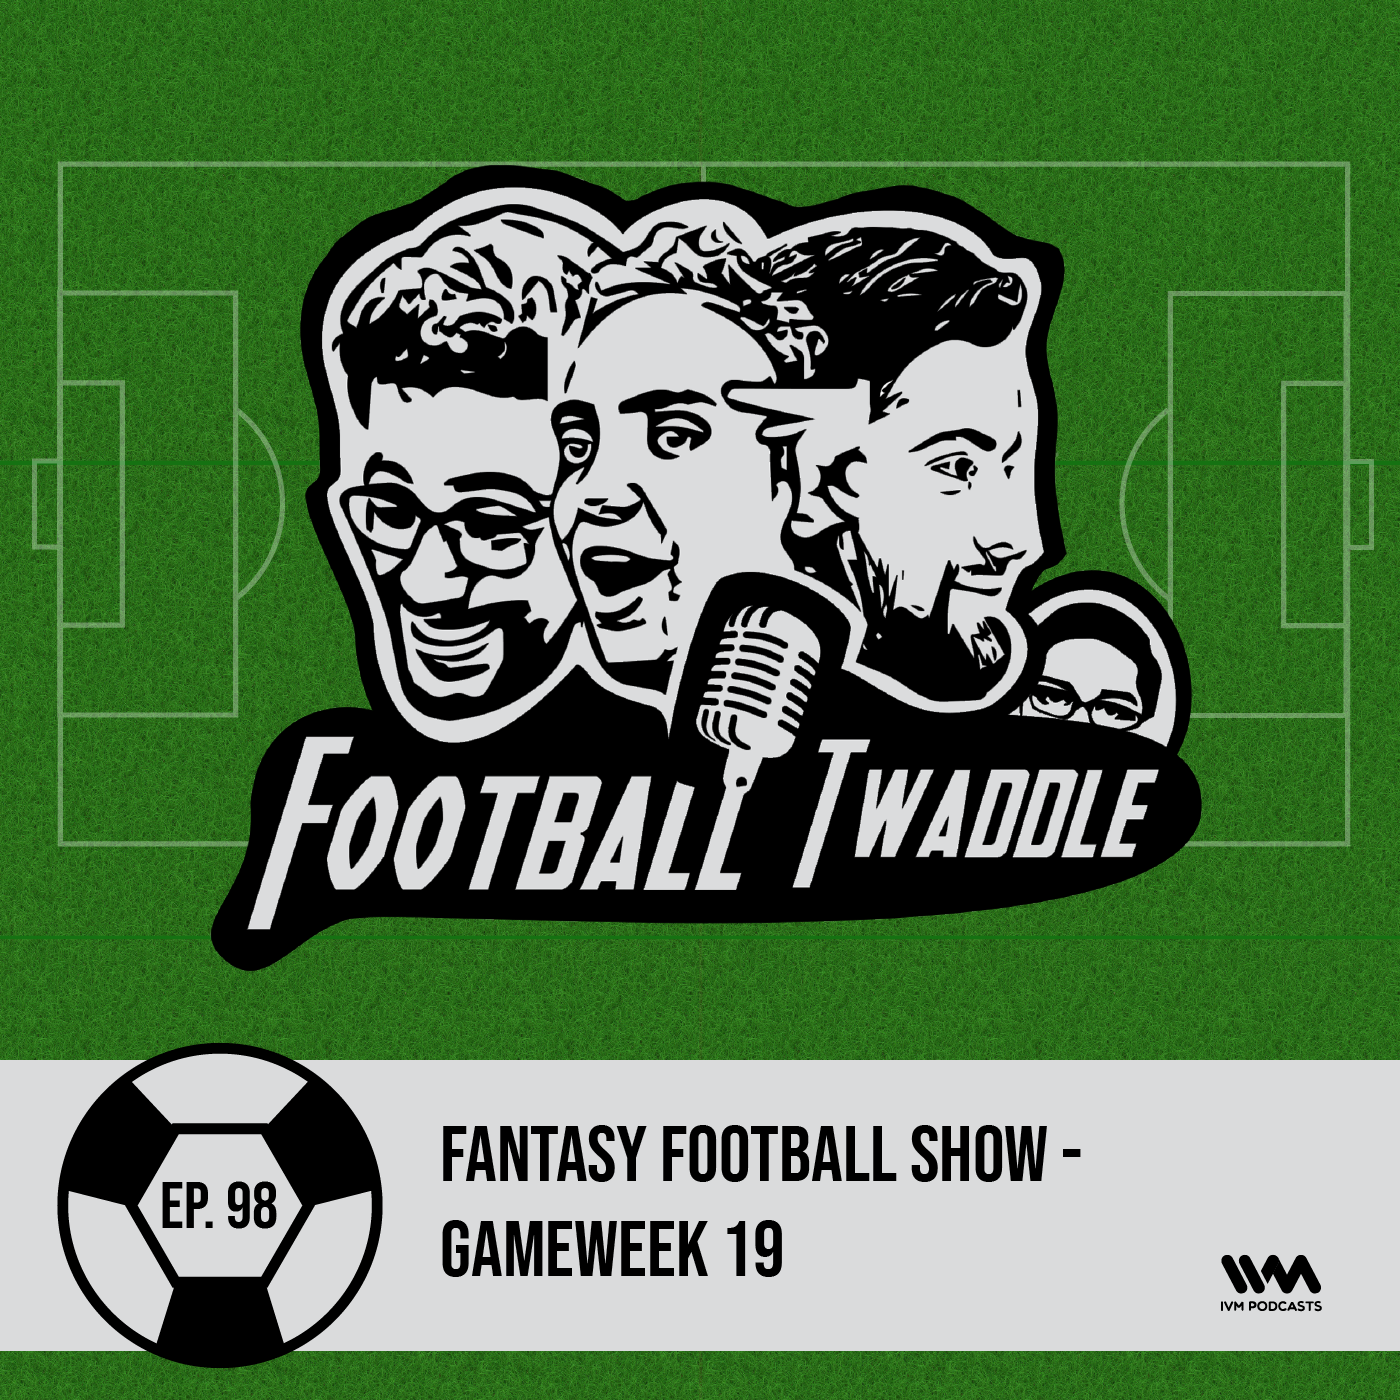 Fantasy Football Show - Gameweek 19